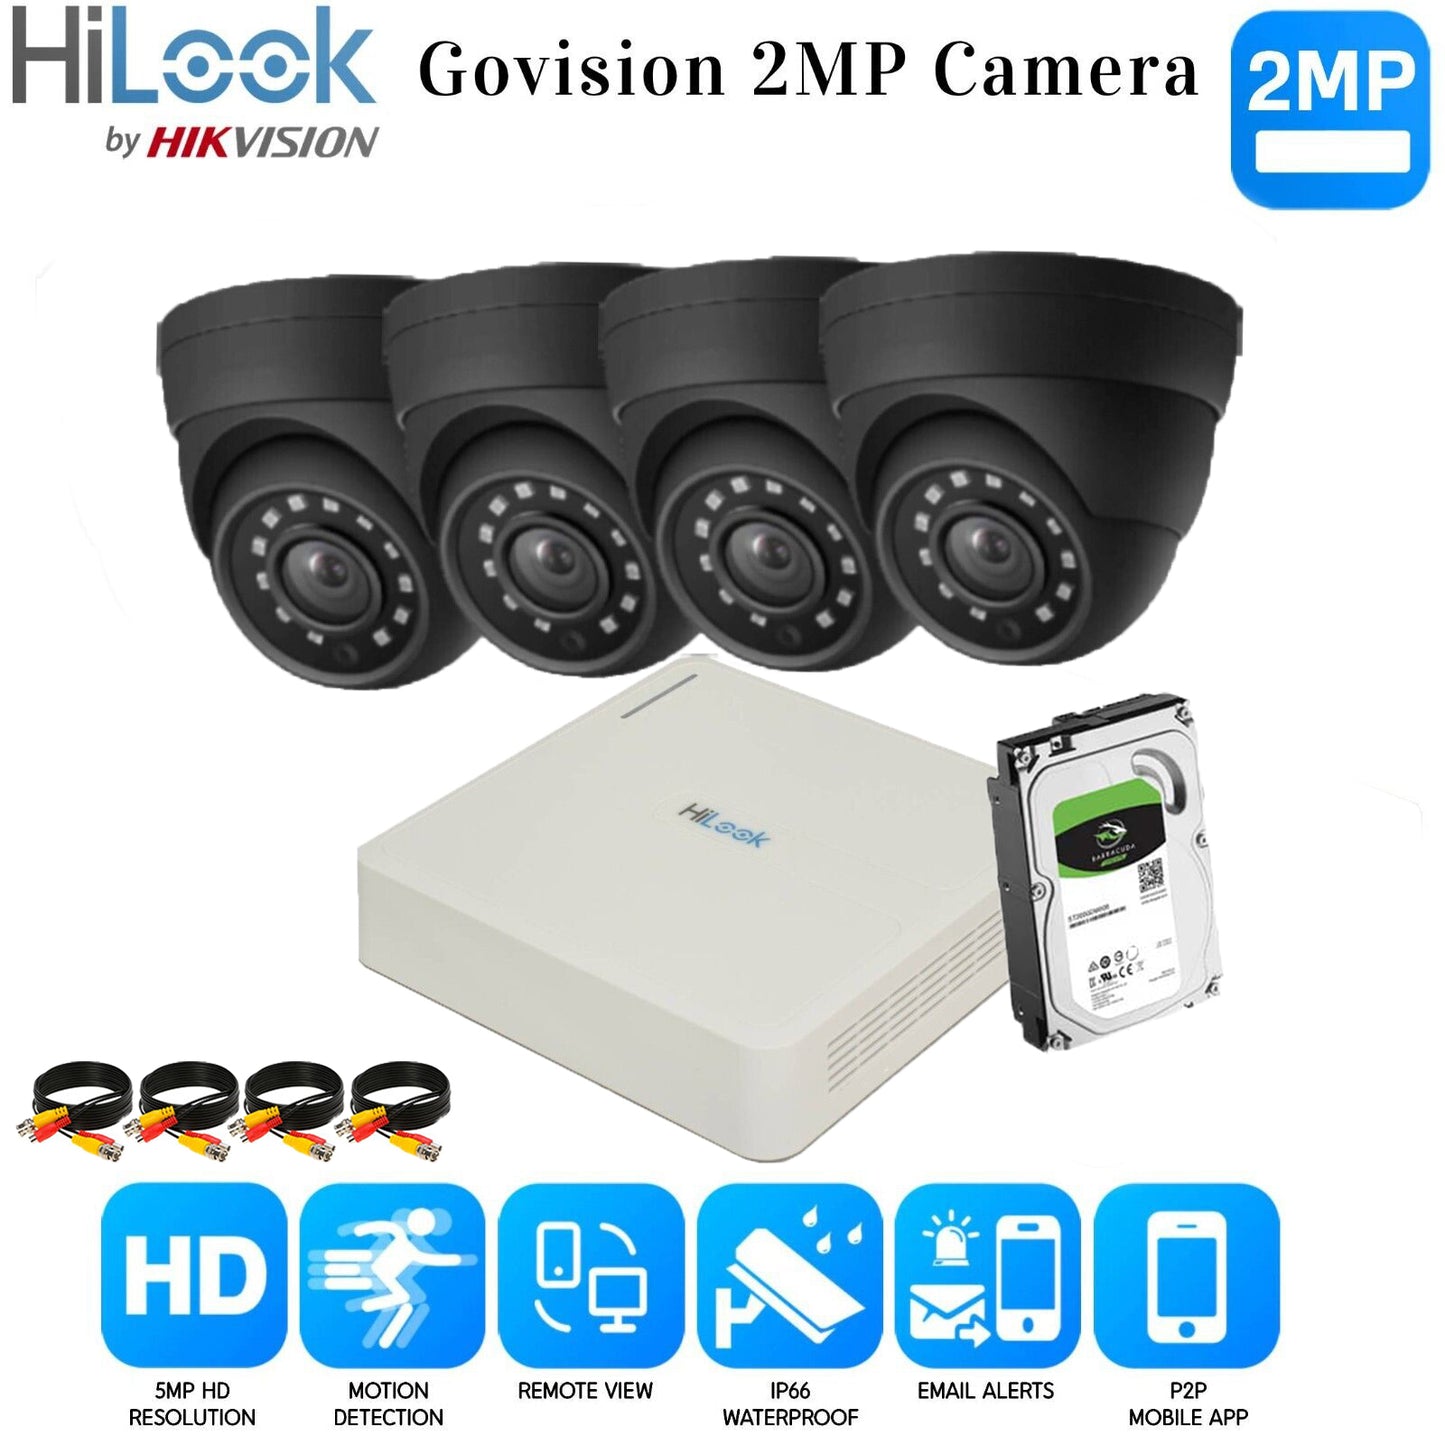 <img src="Hikvision Home Outdoor CCTV Security Camera System Kit HD 1080P 4CH DVR IR NIGHT 8CH DVR 4xCameras (gray) 500GB HDD.jpg" alt="Surveillance camera system ">